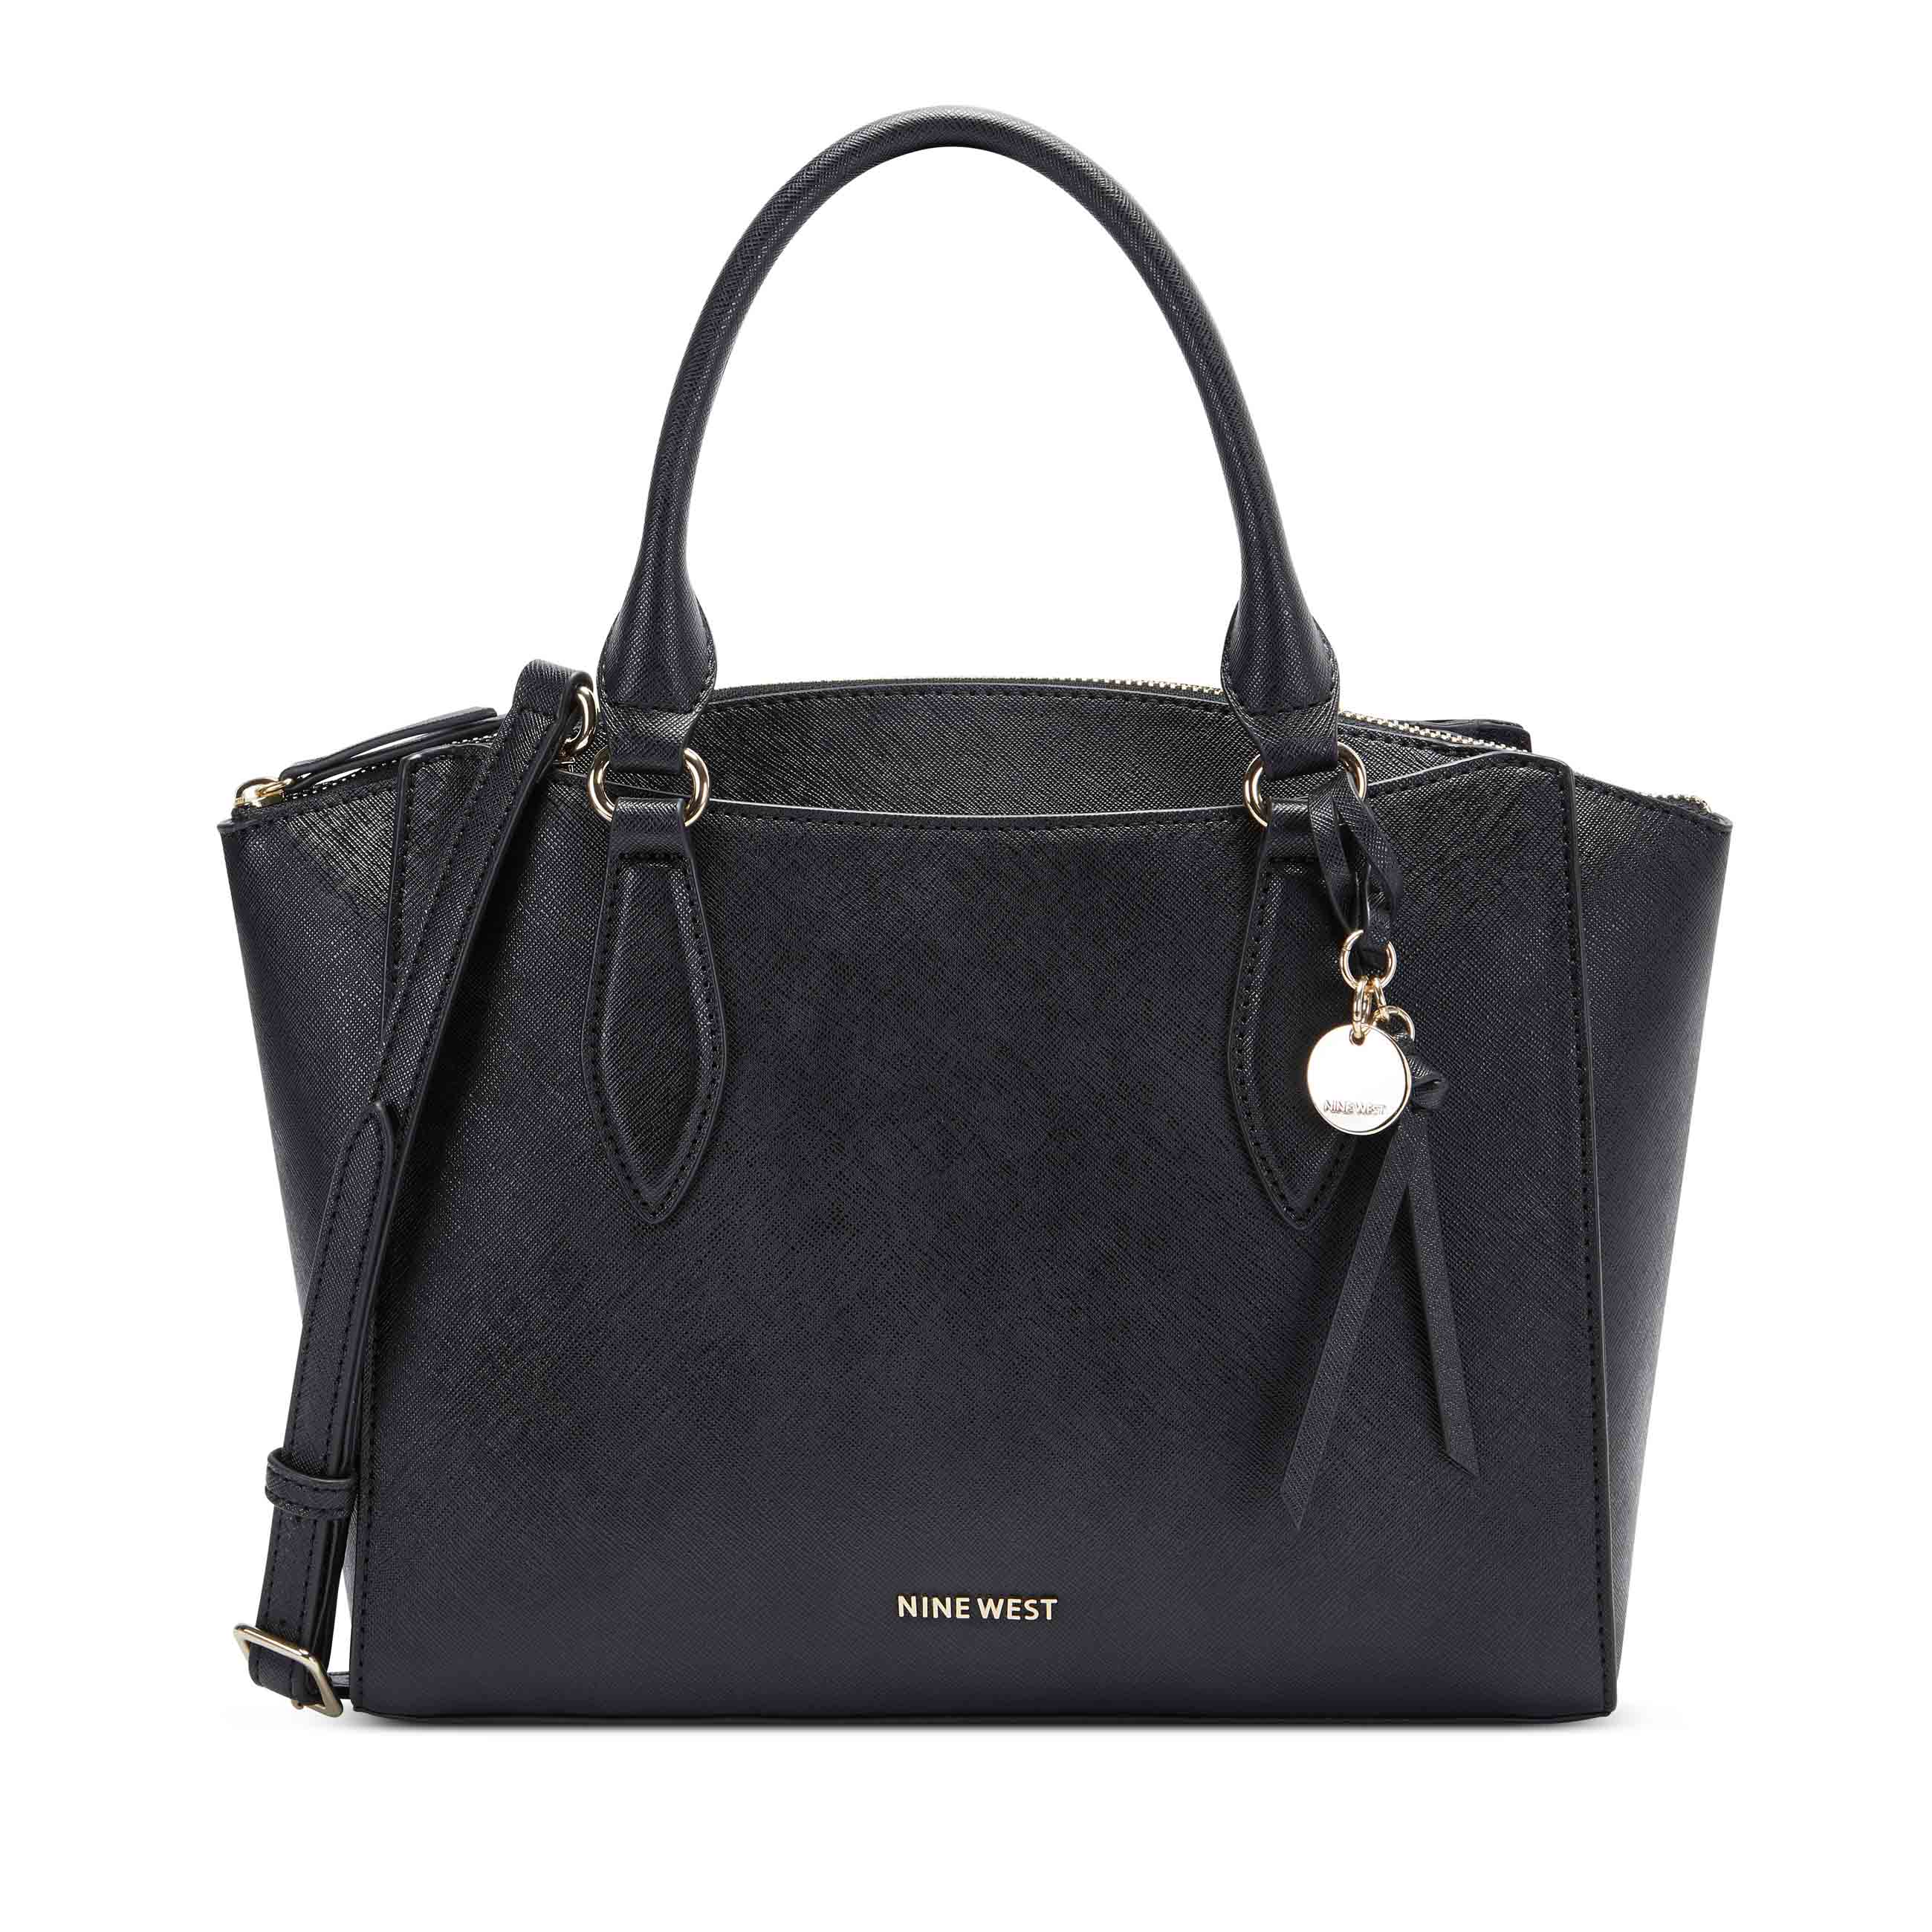 nine west purse handbag bag tote shoulder casual satchel black | eBay